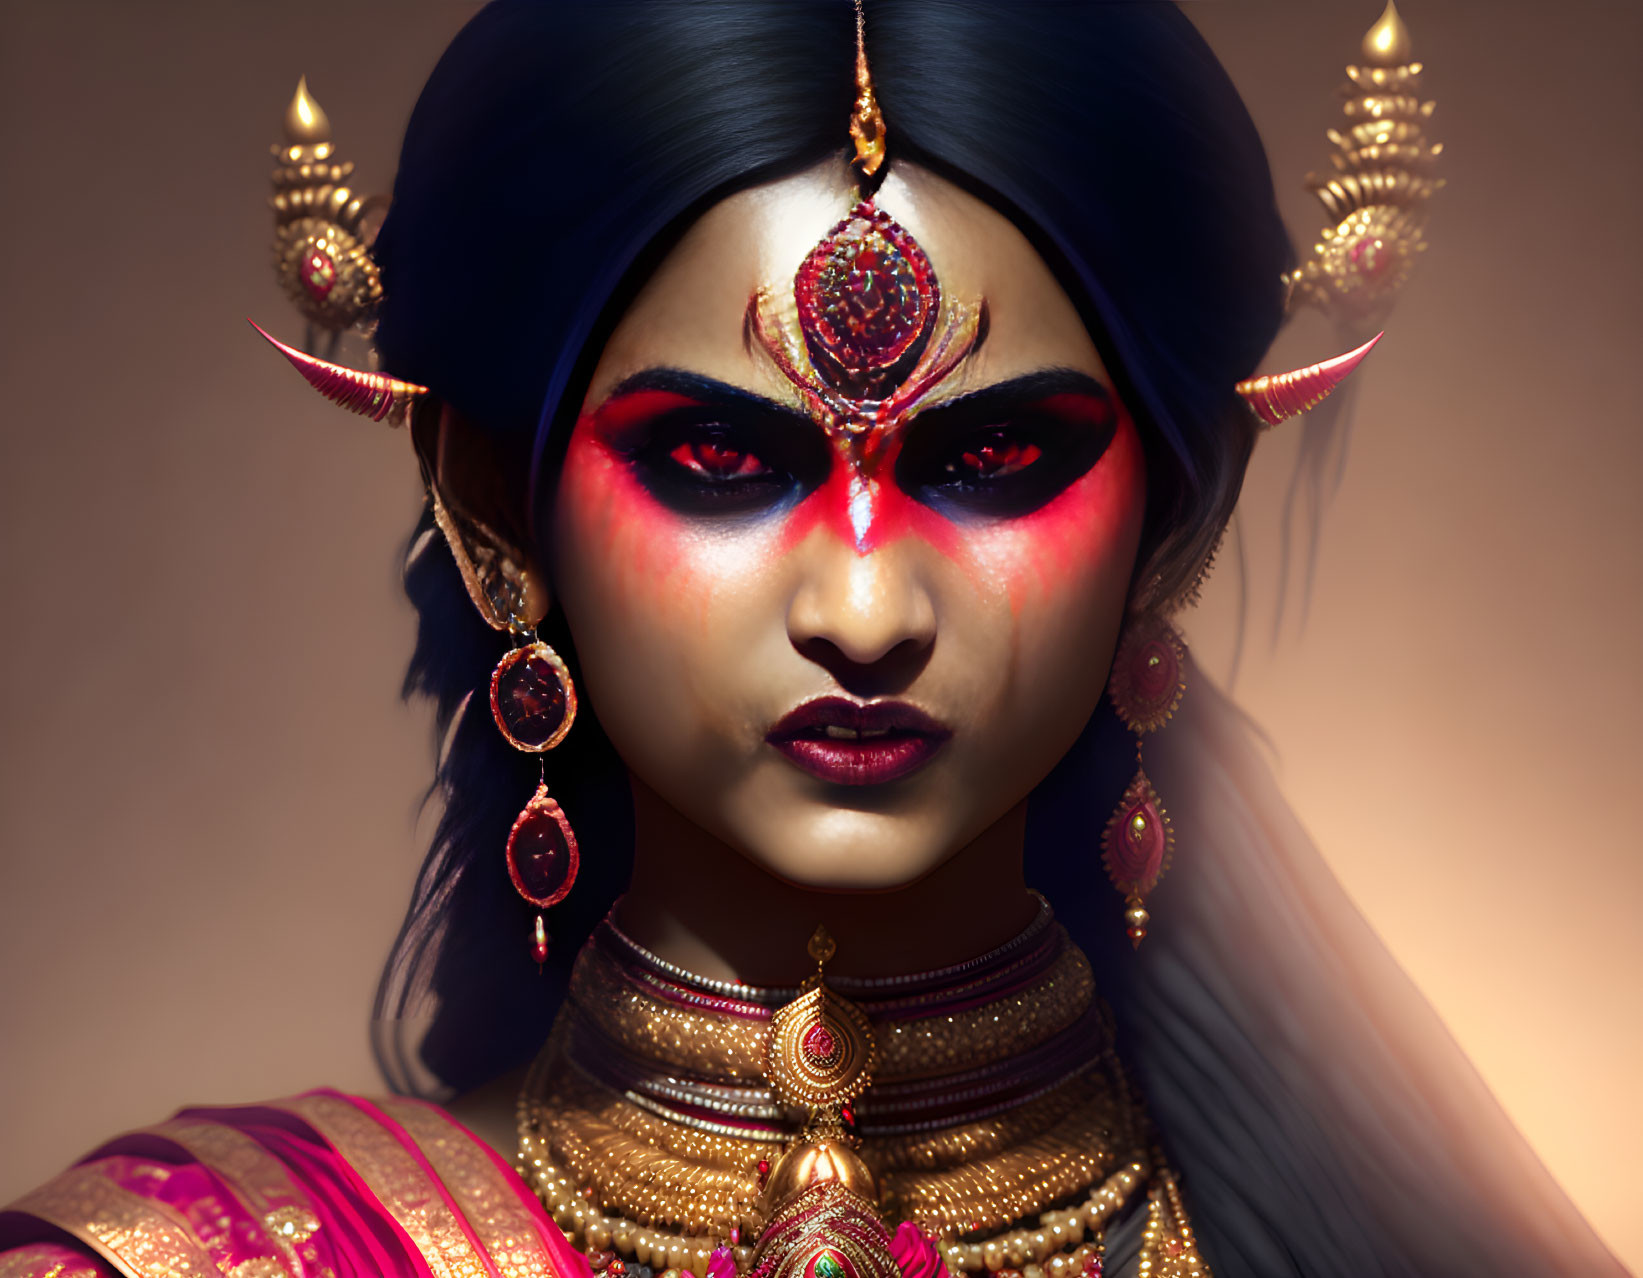  Indian rakshasa demonic girl